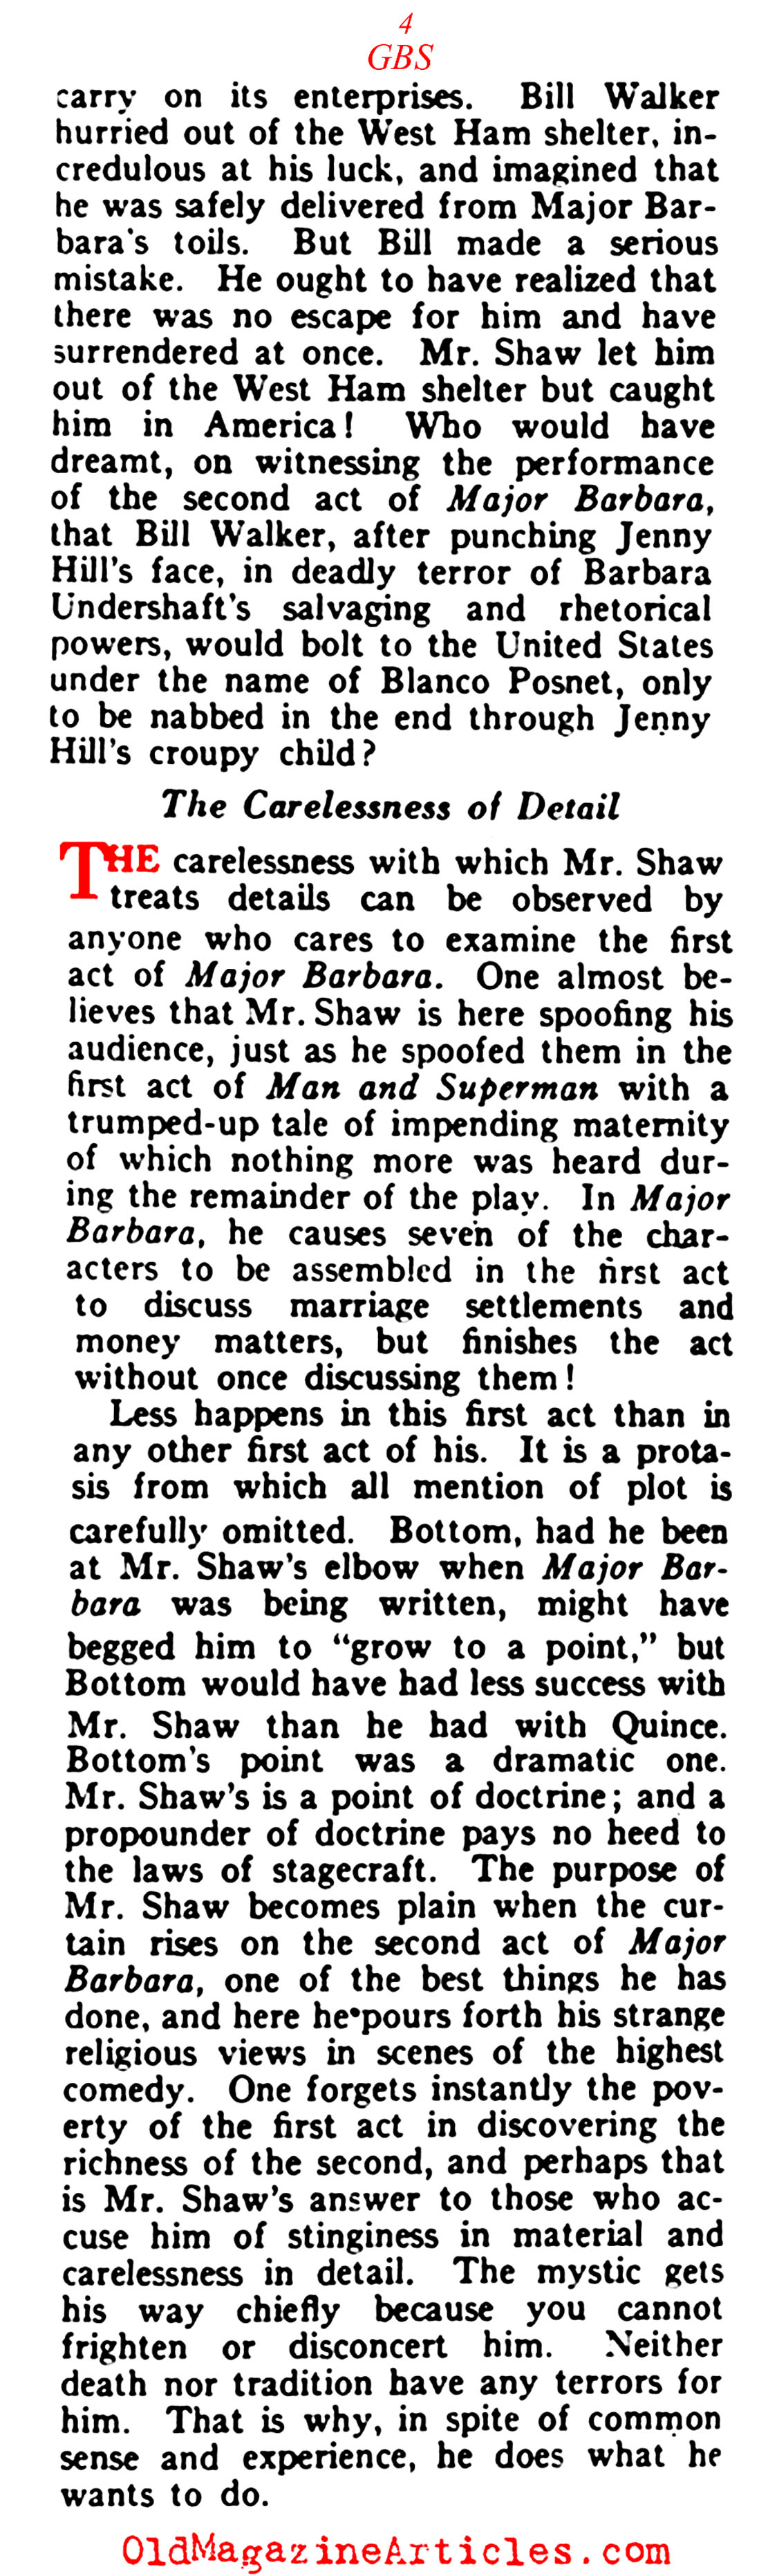 George Bernard Shaw and Literary Recycling (Vanity Fair, 1921)